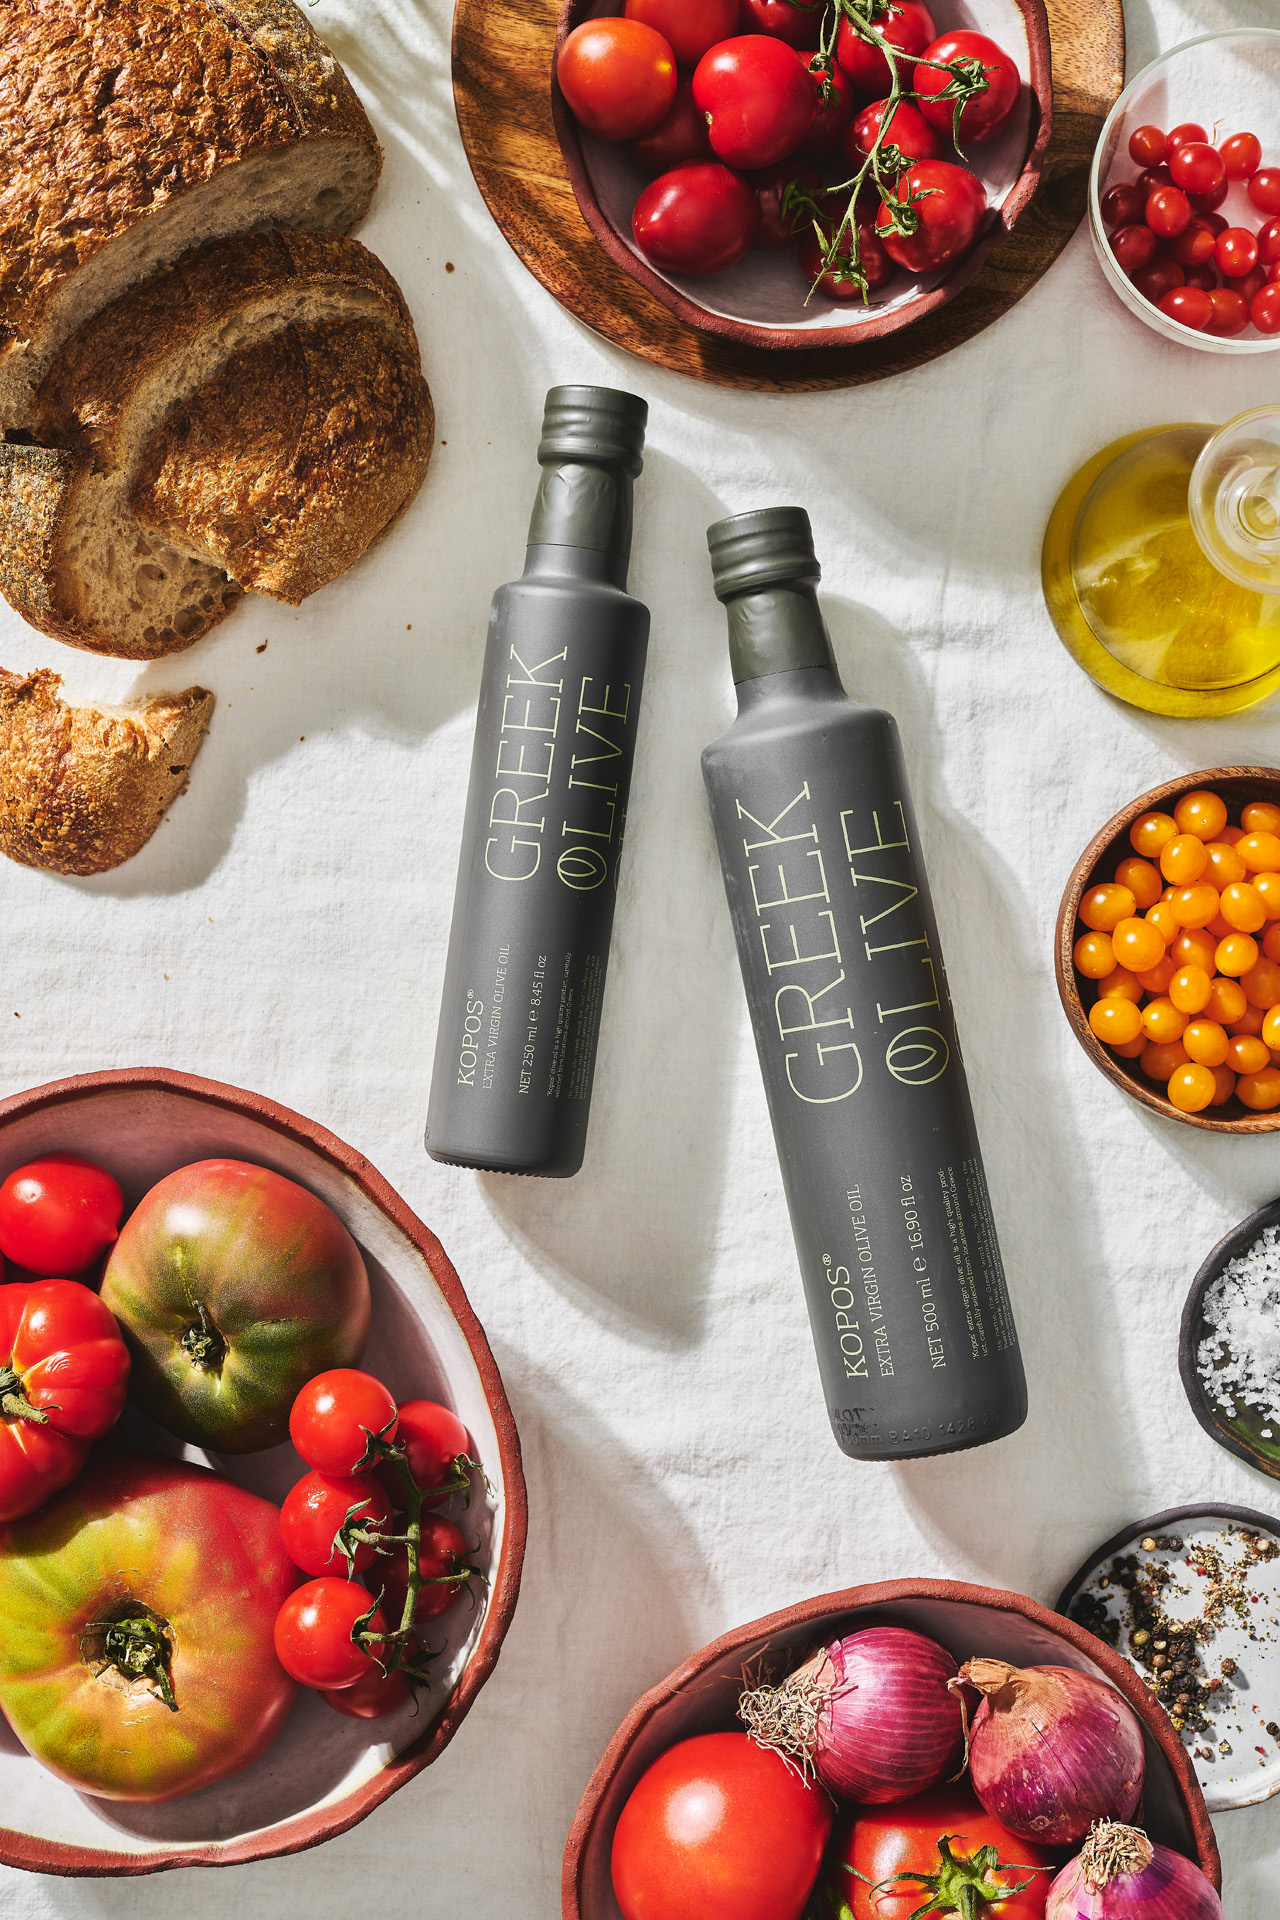 Andriotis Greek Olive Oil table with kopos olive oil glass bottles and vegetables